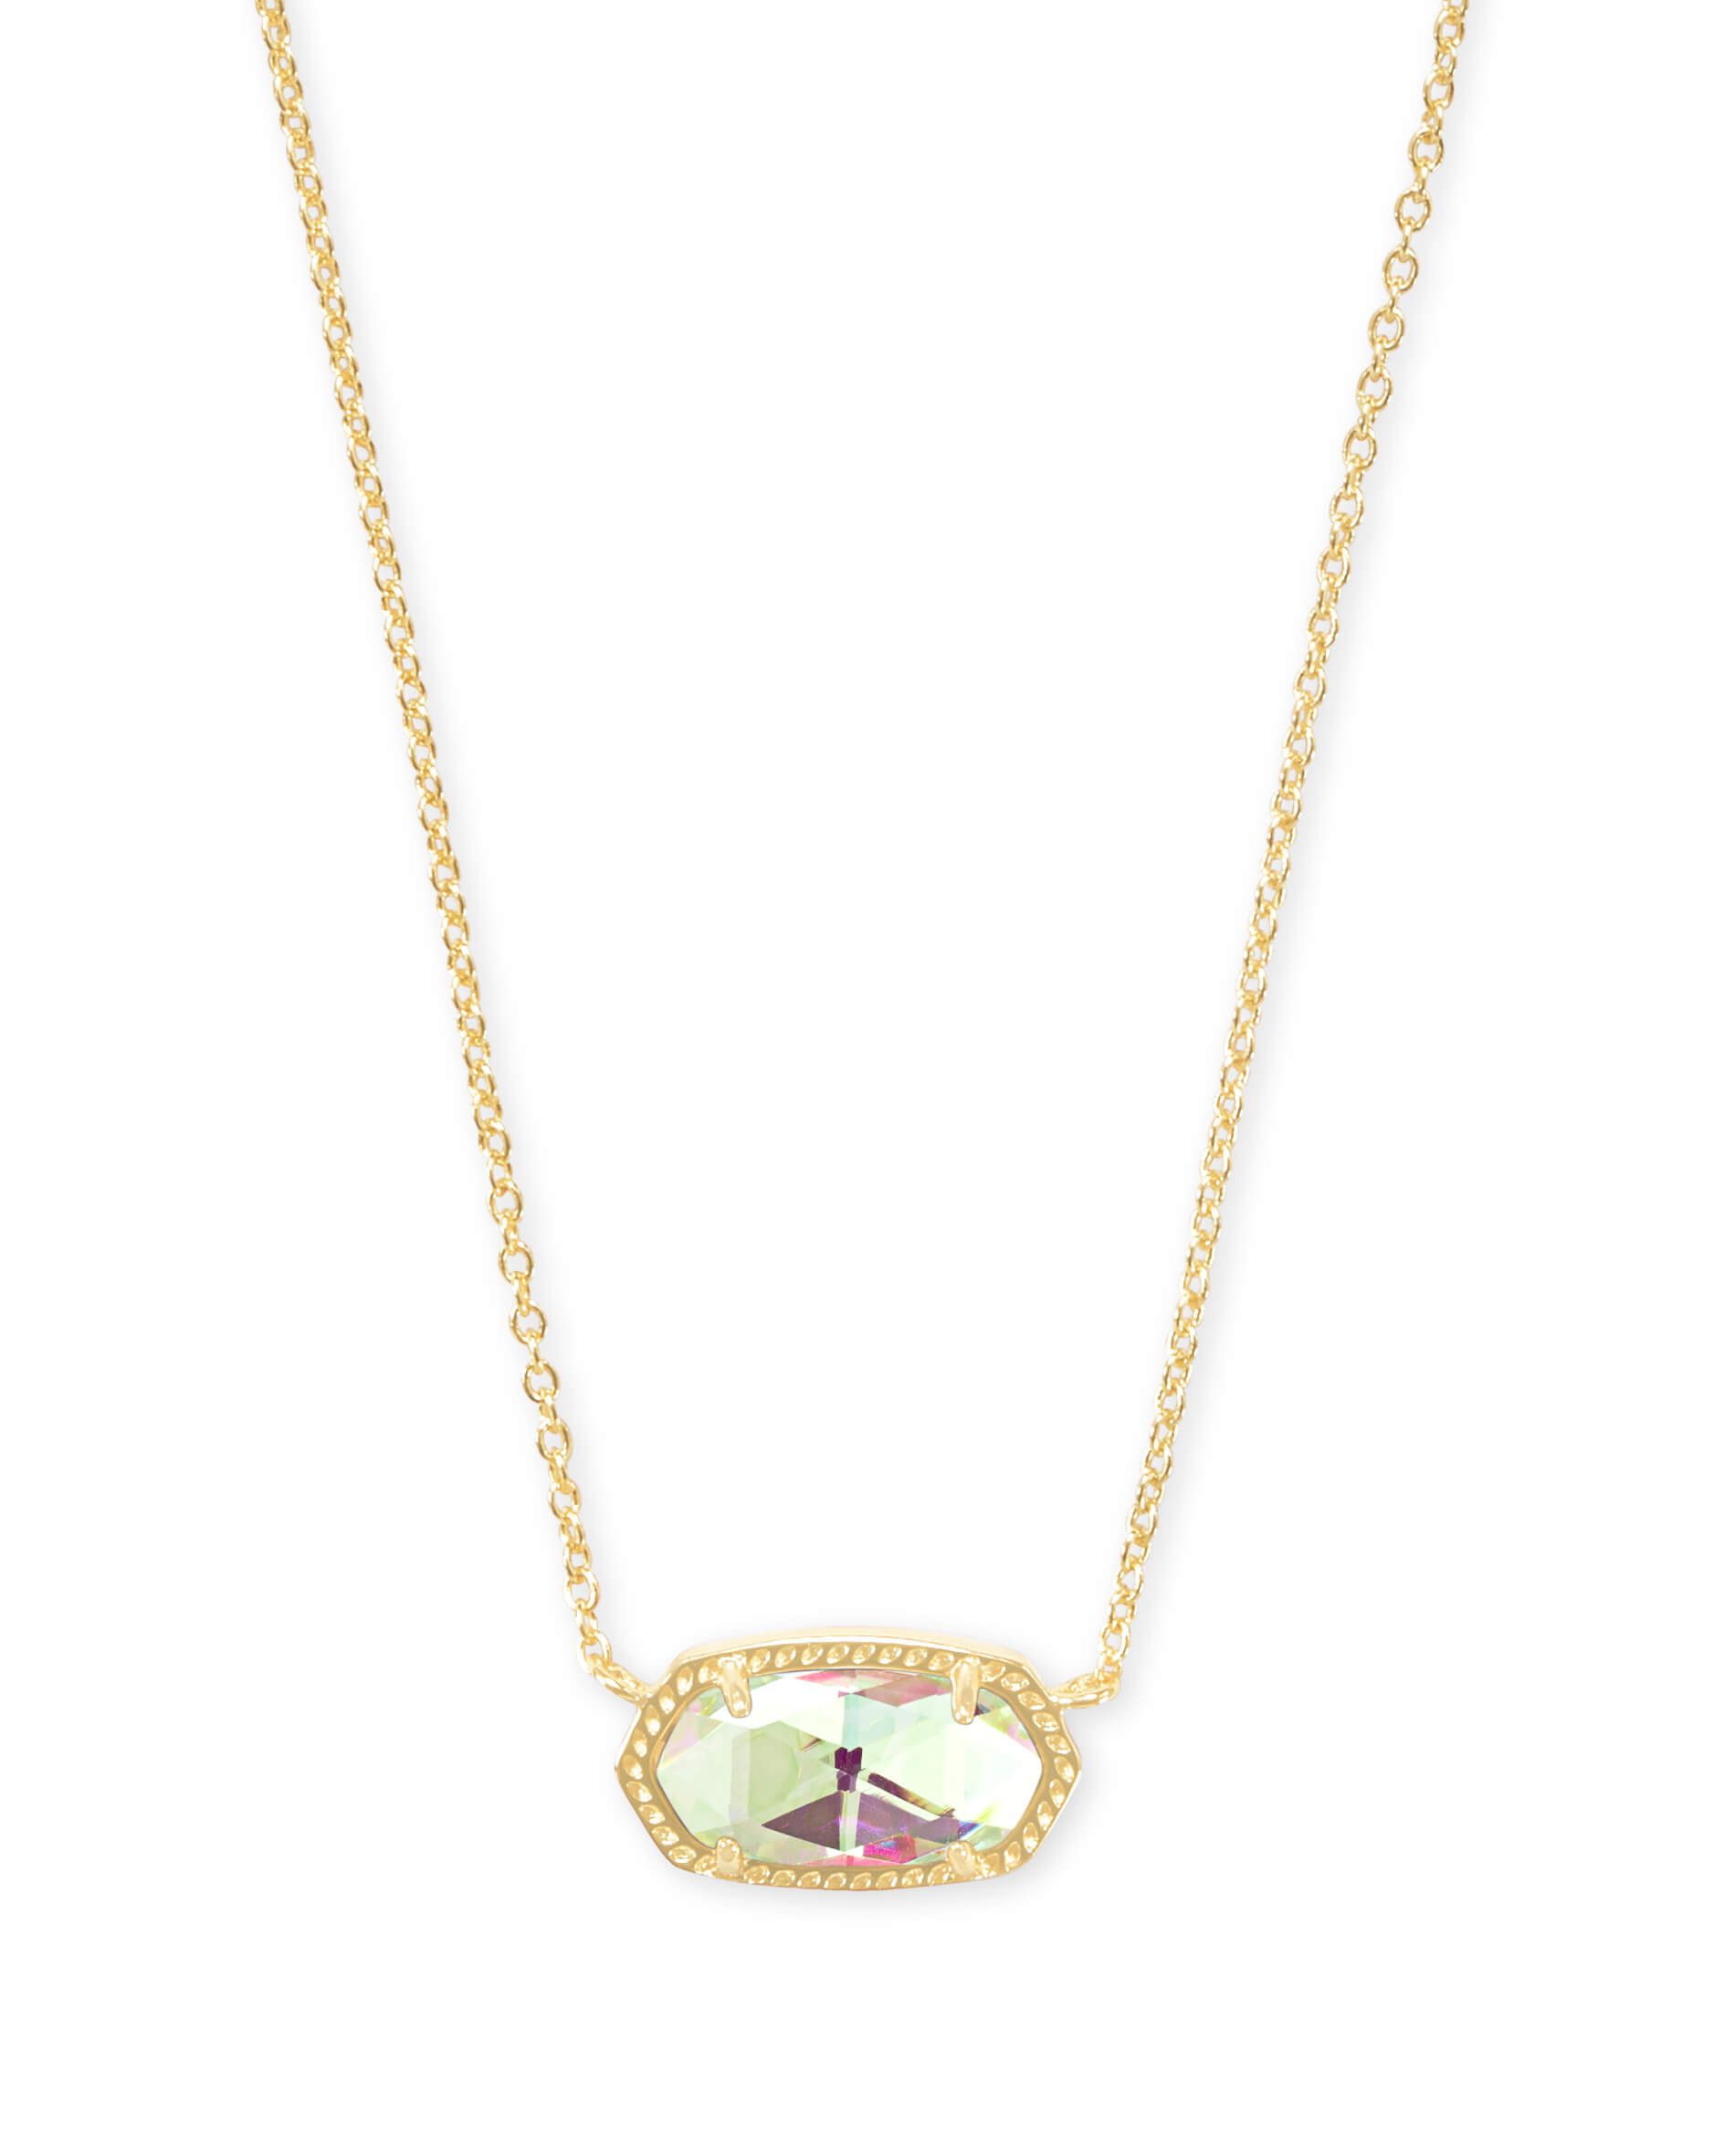 Elisa Gold Pendant Necklace in Dichroic Glass | Kendra Scott | Kendra Scott